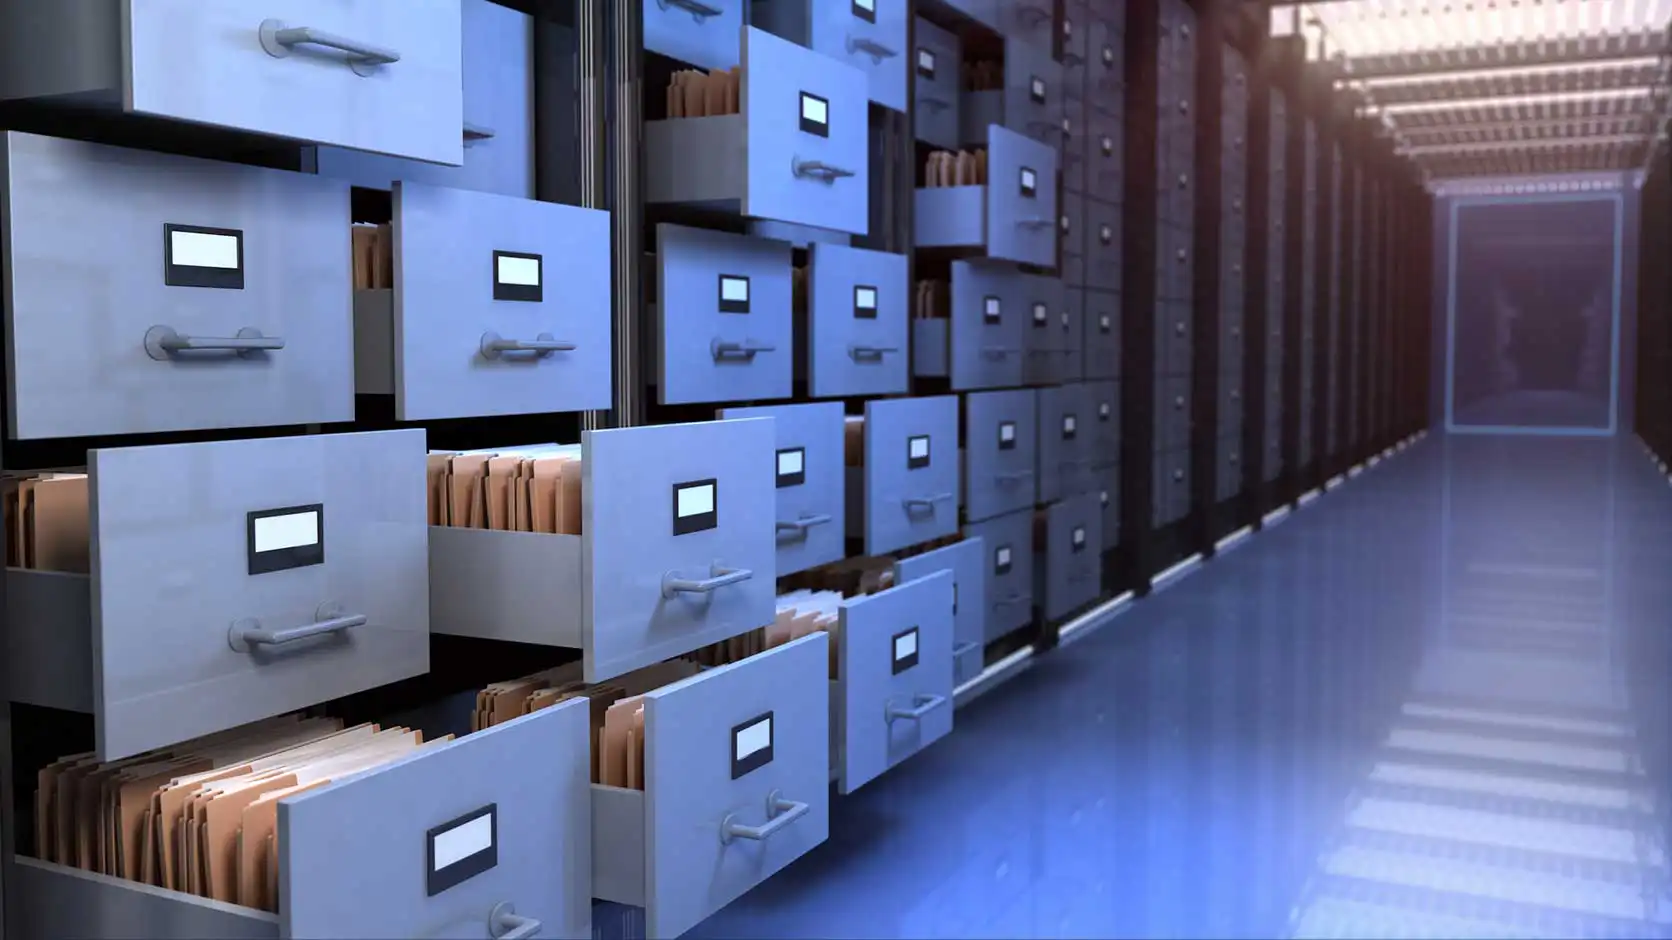 Naseej Archive Management Solutions